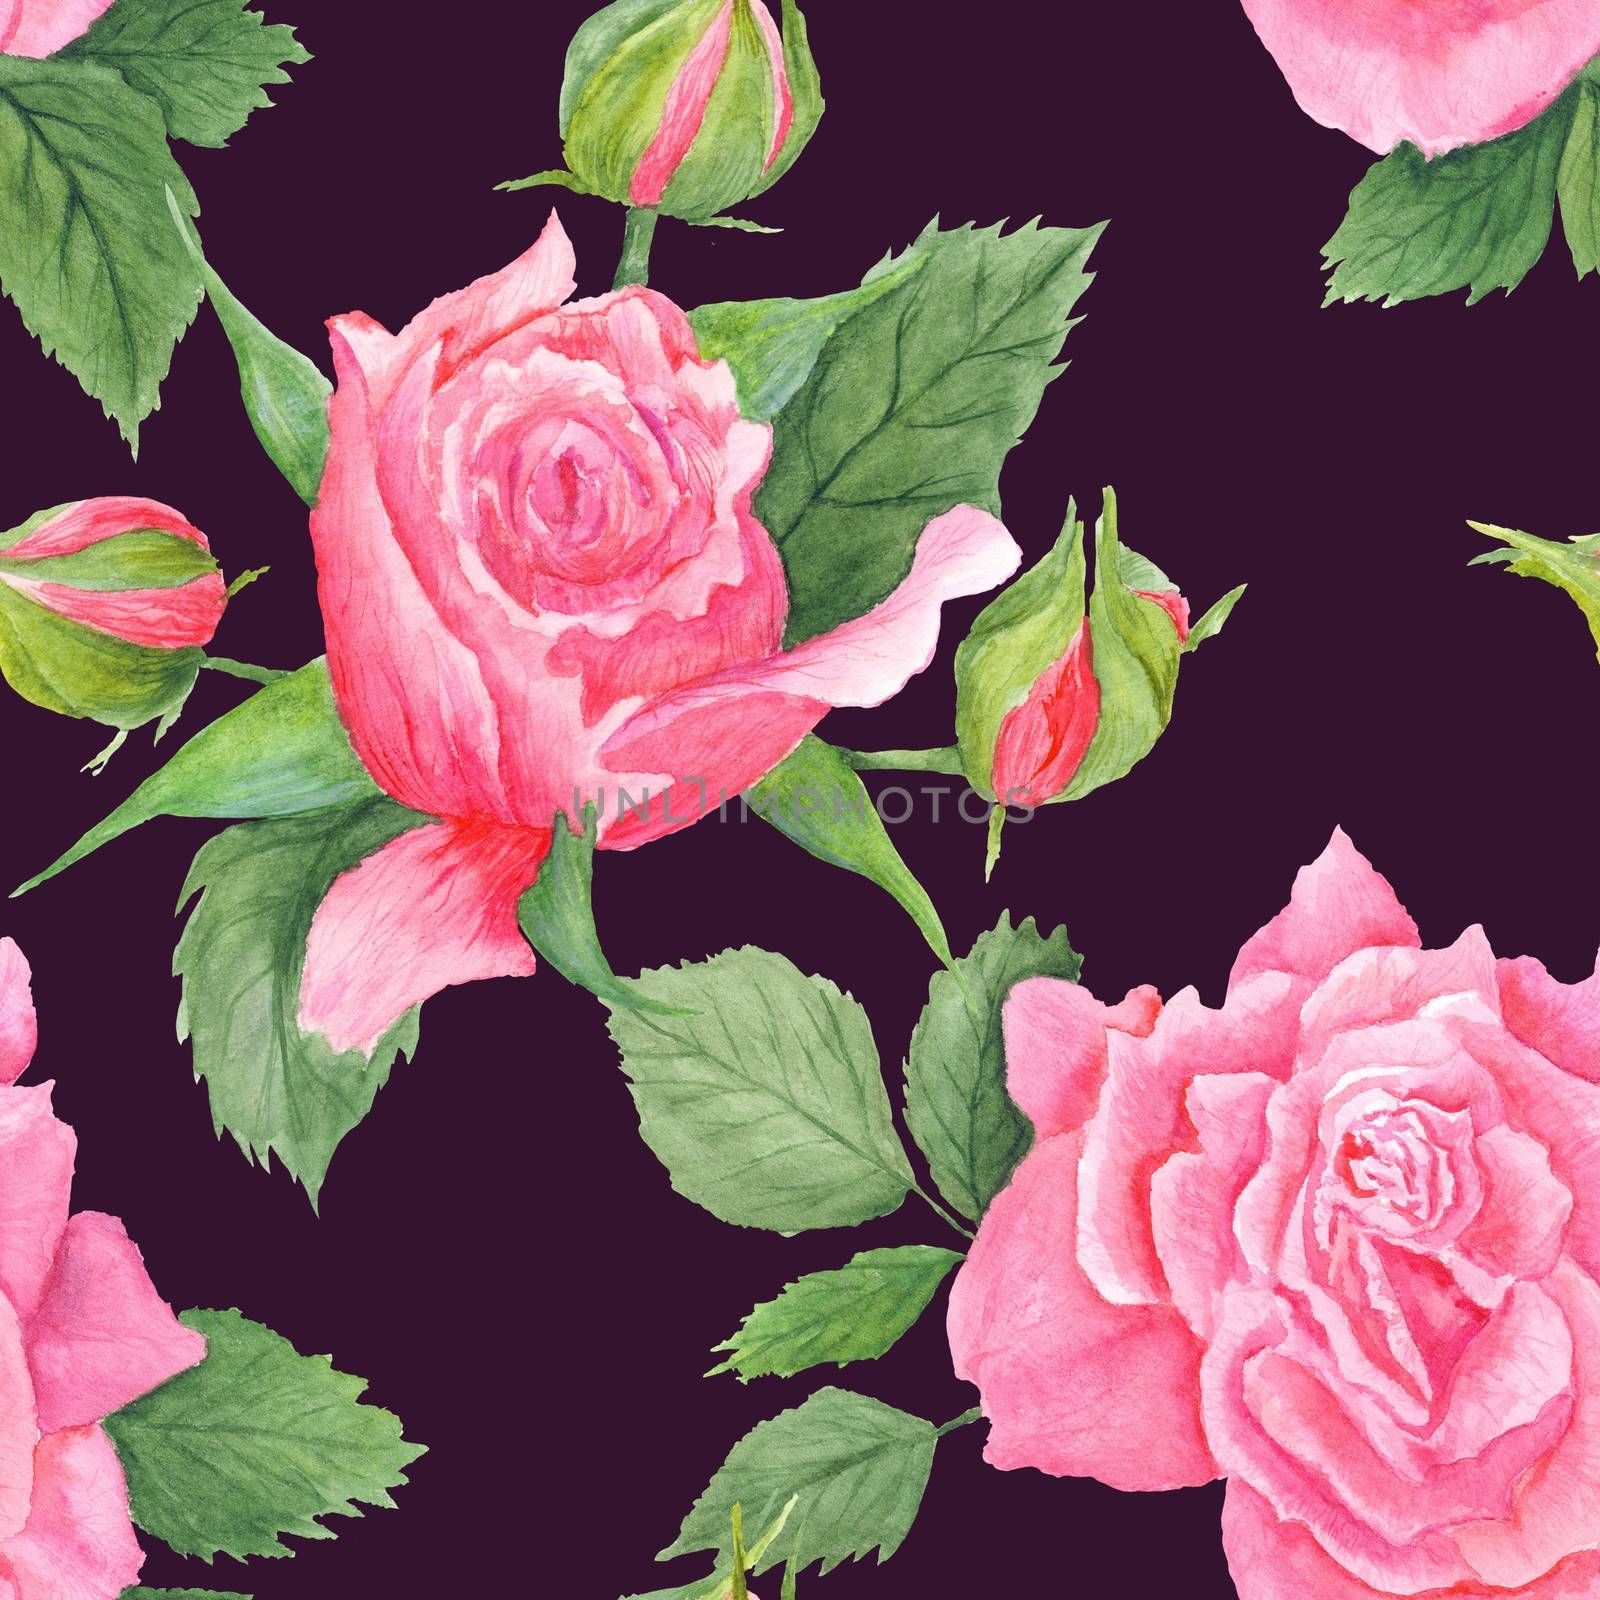 Rose Botanical Watercolor Pattern by kisika